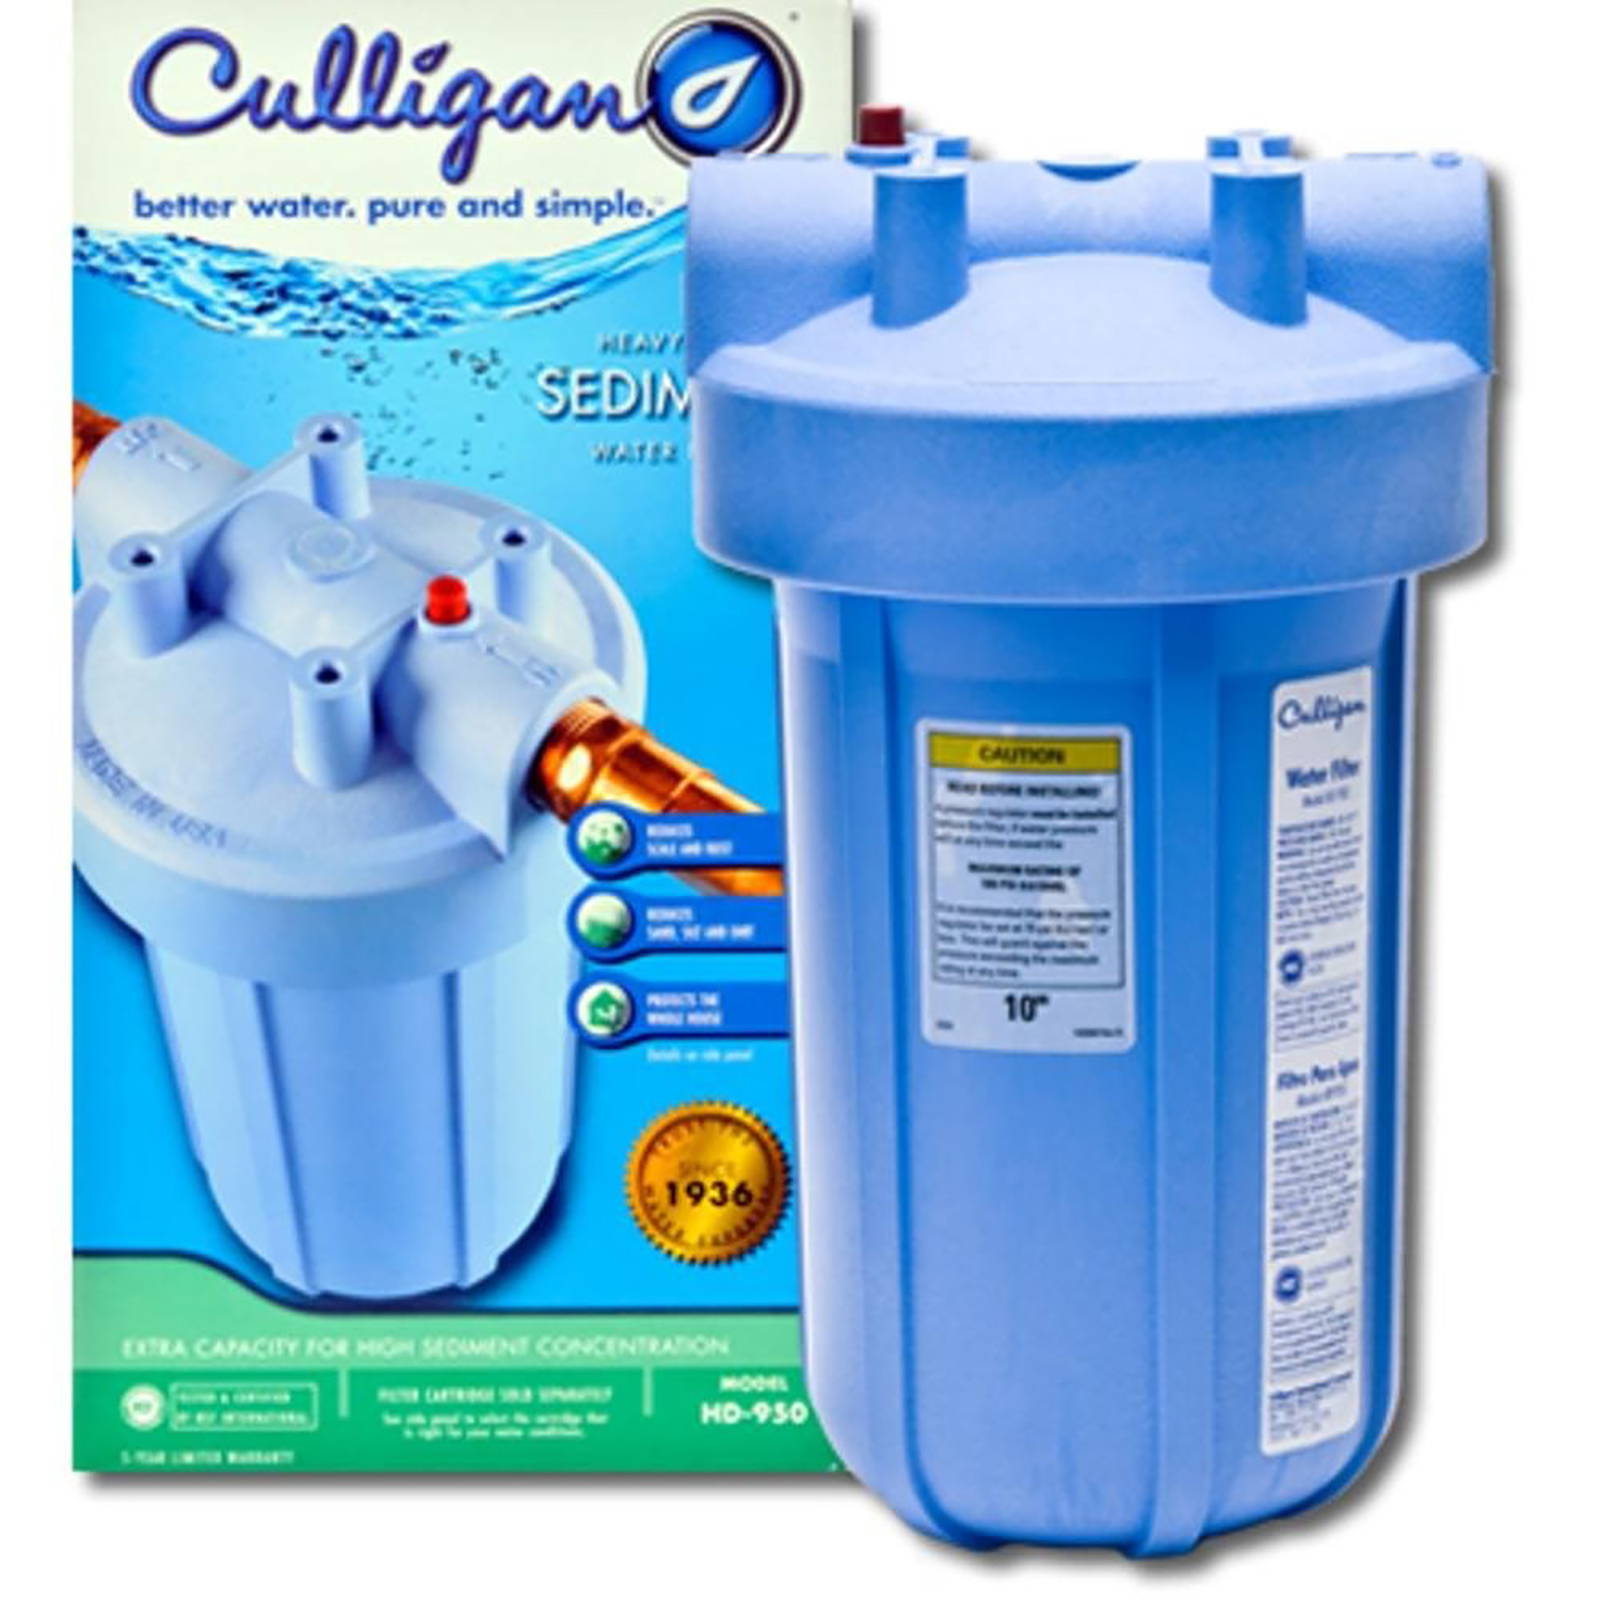 Culligan ZIDB01NH54O8X Heavy-Duty Whole House Sediment Water Filter